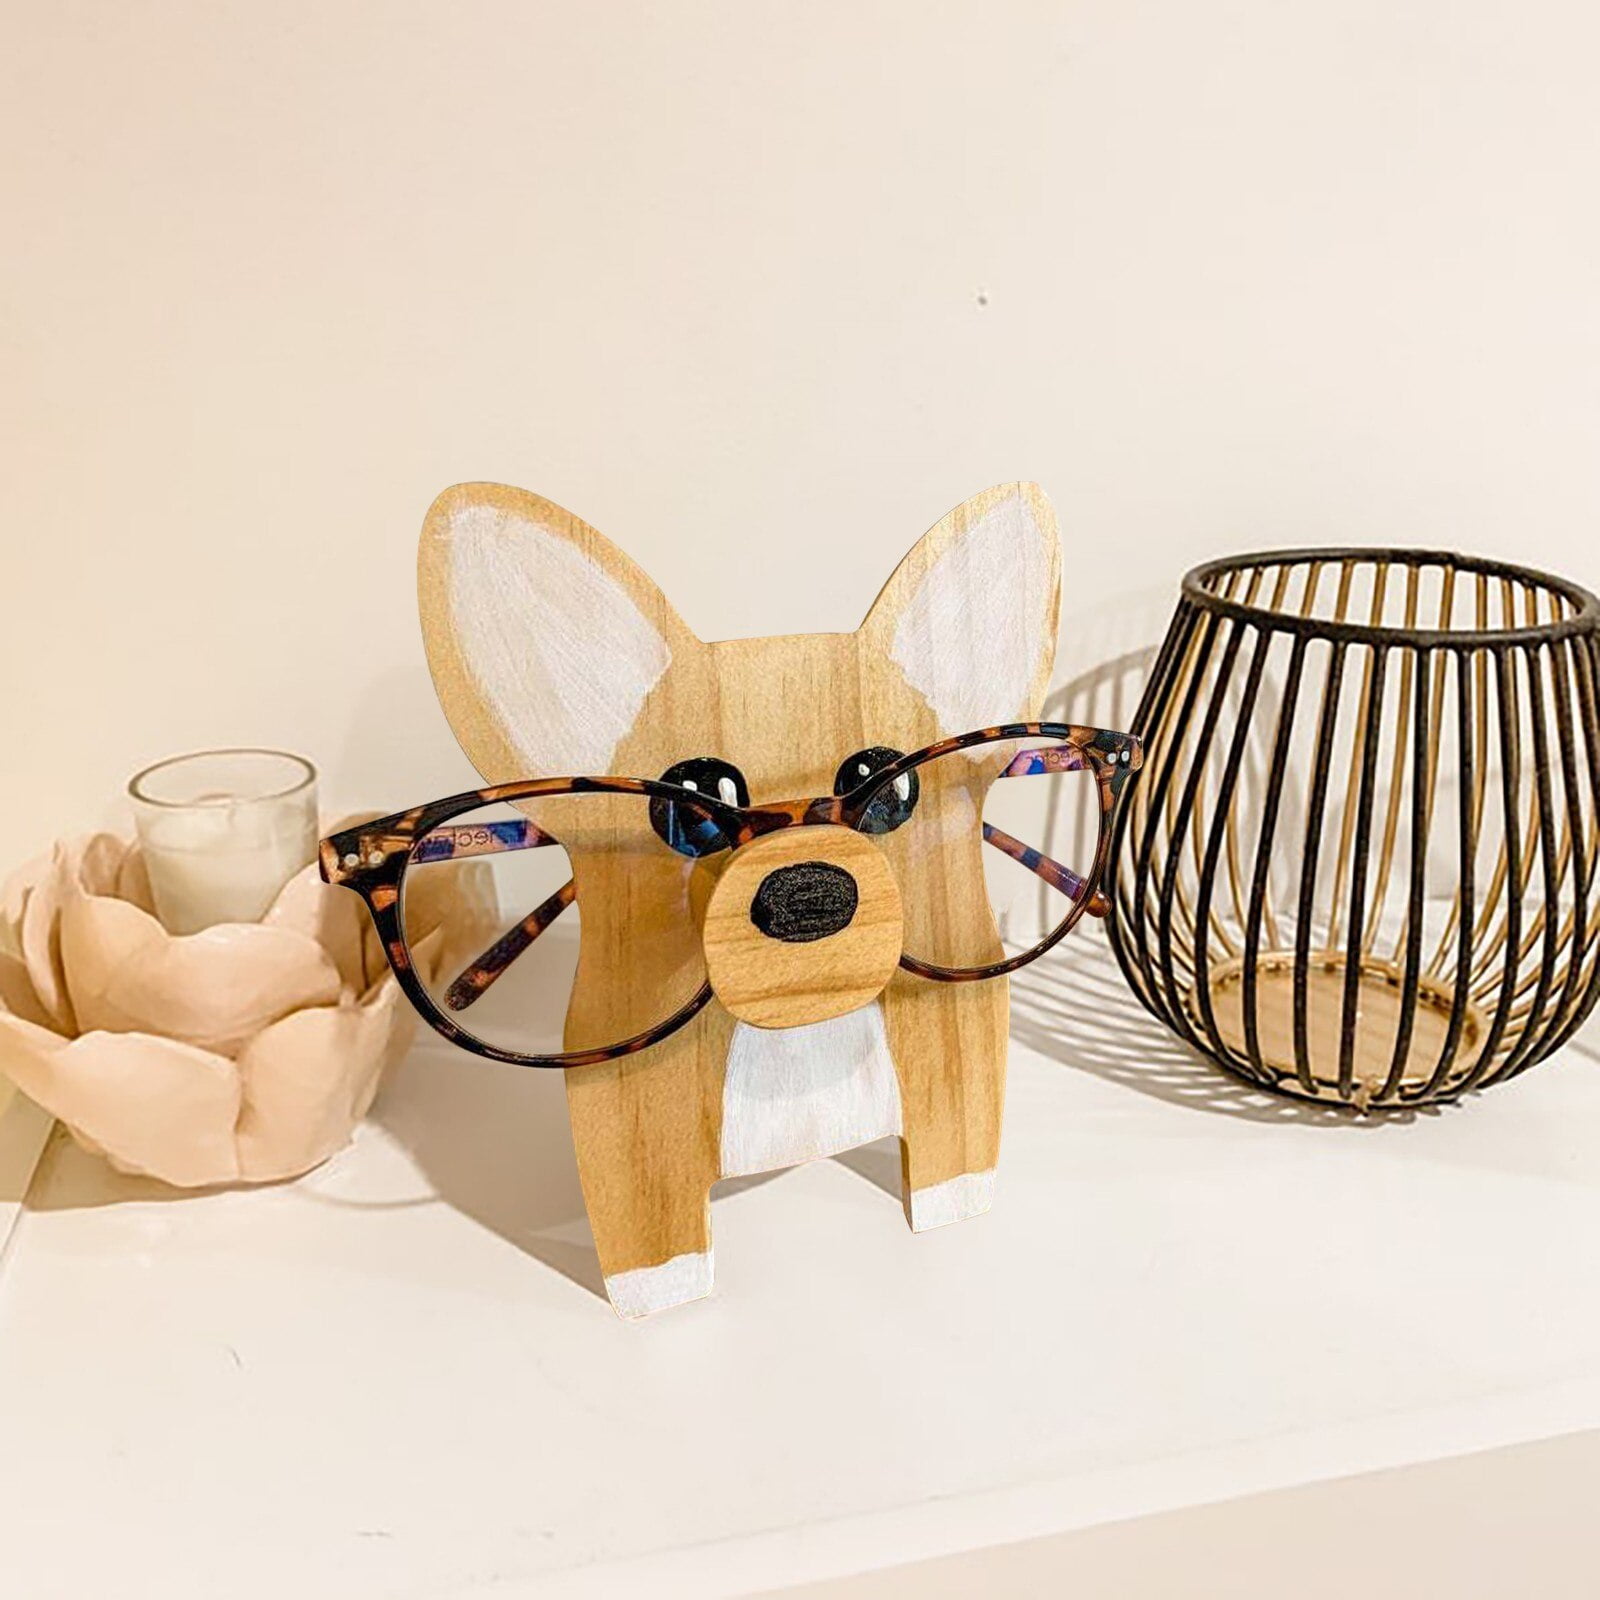  NEWDEZHI Creative Animal Glasses Holder, Wooden Eyeglass Holder,  Cute Pet Glasses Stand for kids, Handmade Carving Sunglasses Display Rack  Home Office Desk Decor Gift (yorkie) : Home & Kitchen